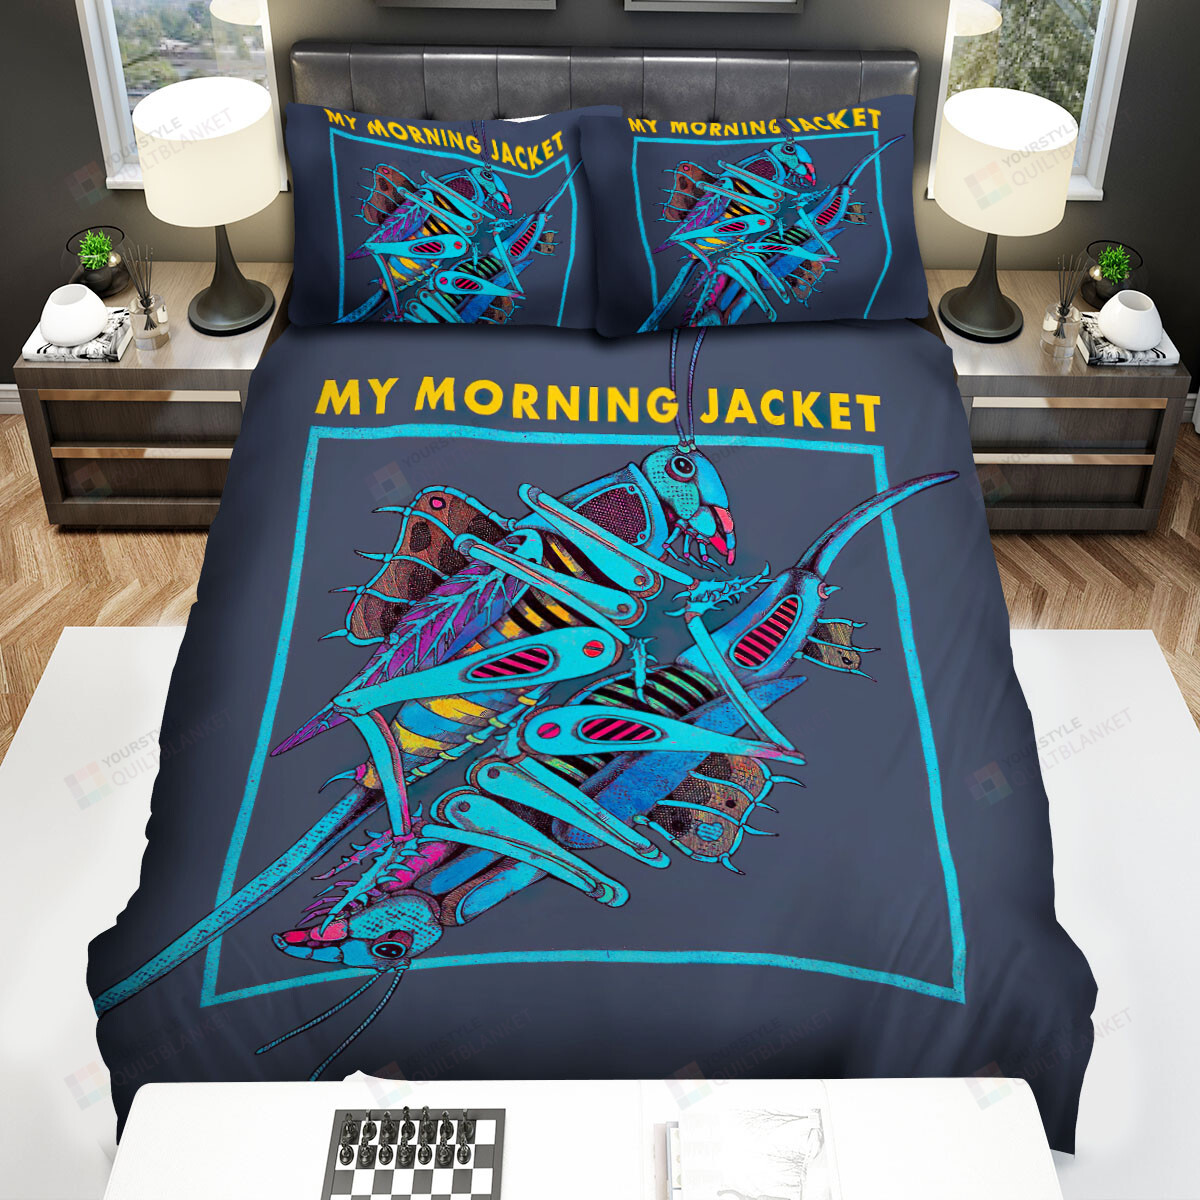 My Morning Jacket Album 5 Bed Sheets Spread Comforter Duvet Cover Bedding Sets